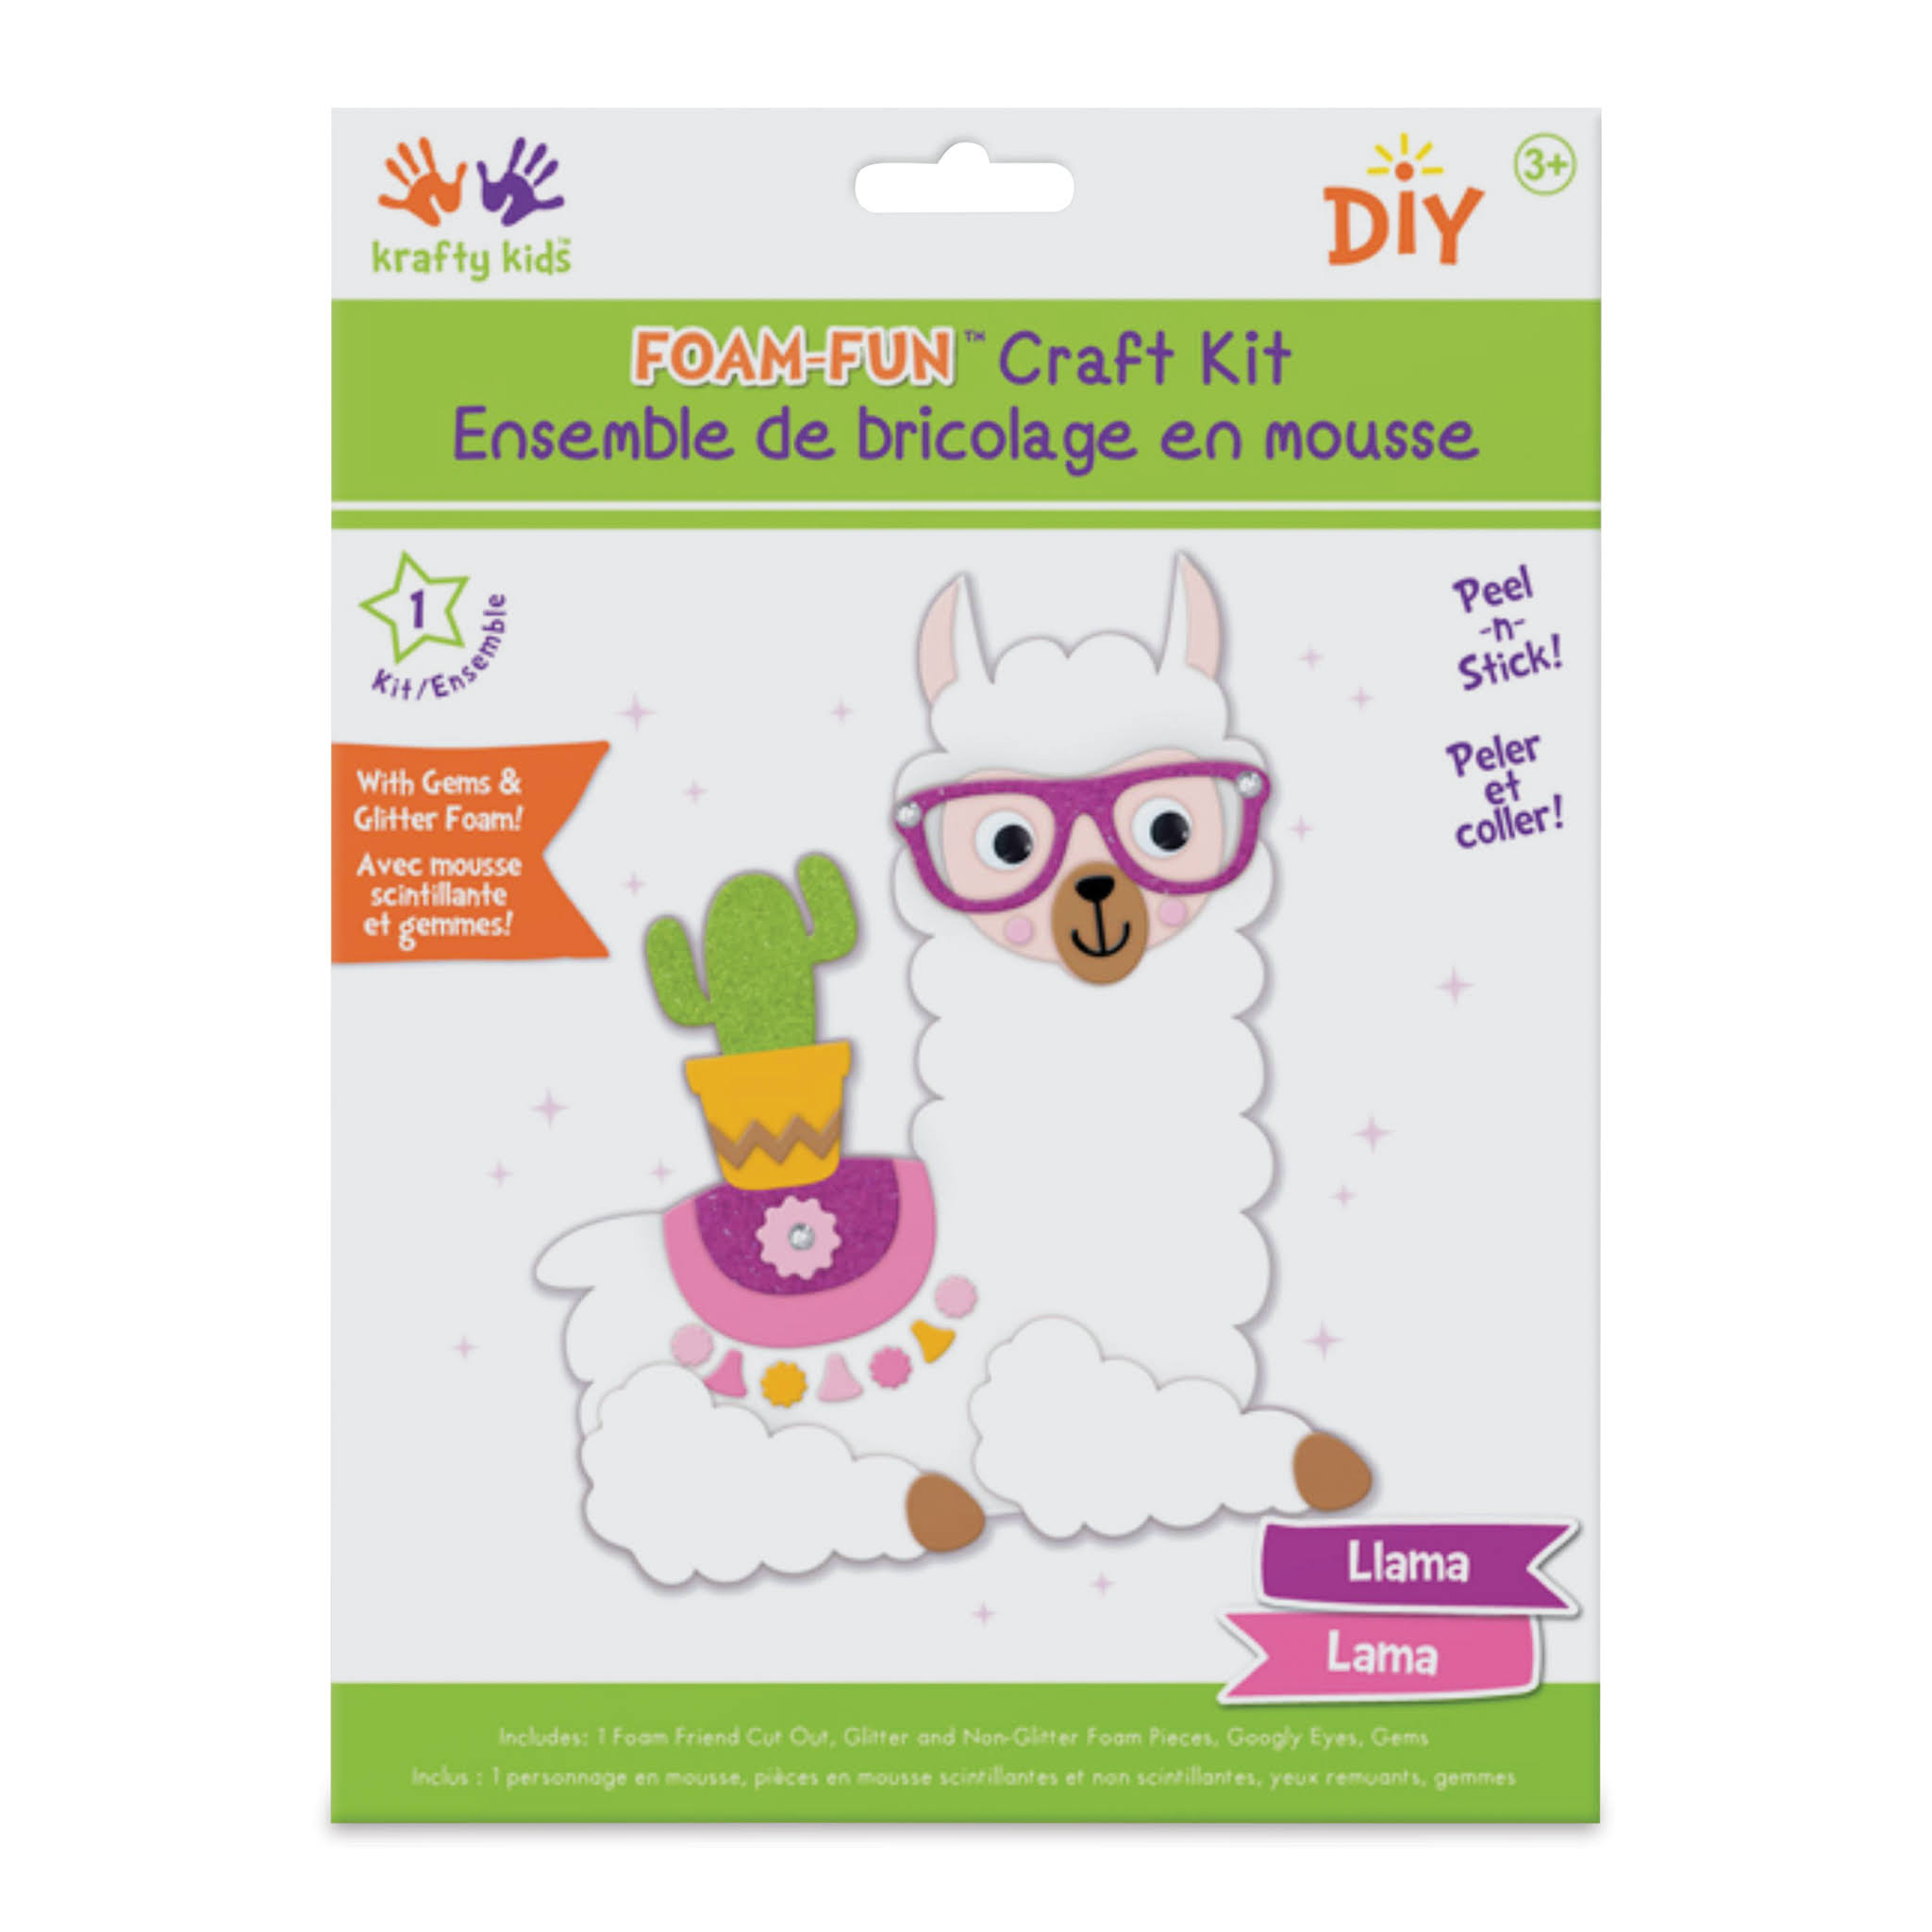 Krafty Kids Foam-Fun Craft Pal Kit - Llama